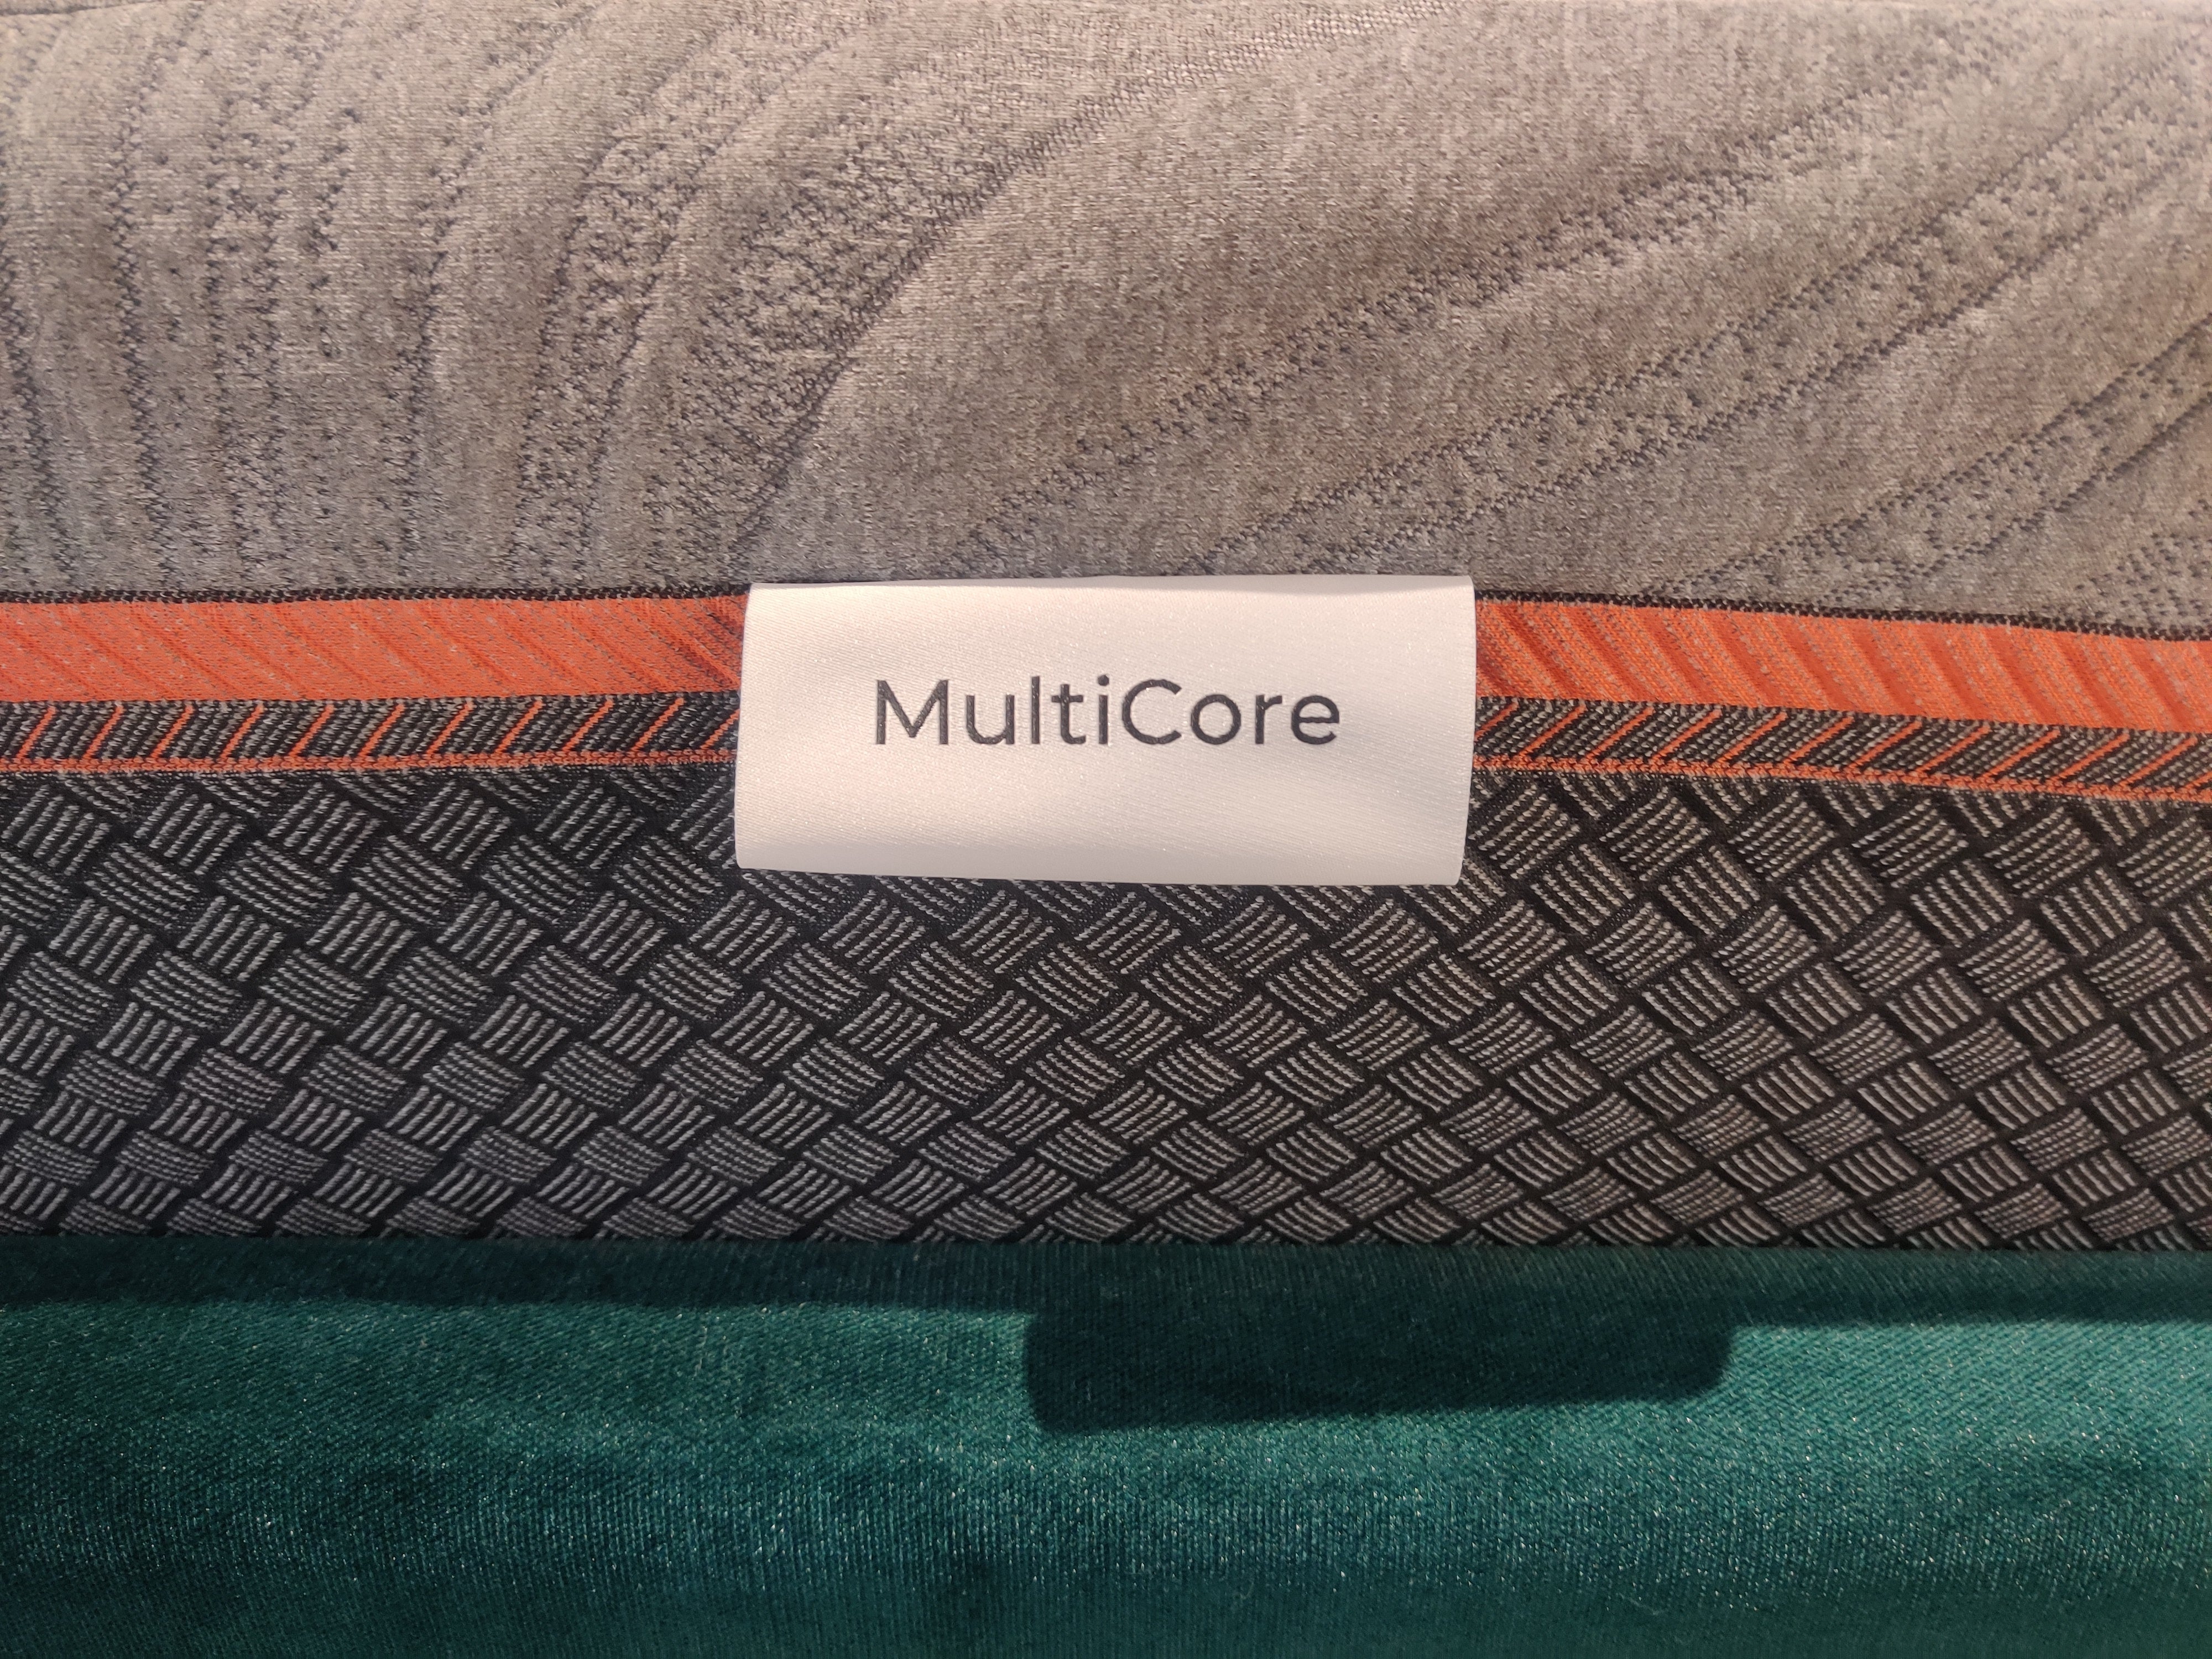 MultiCore Comfort Foam Flippable Mattress